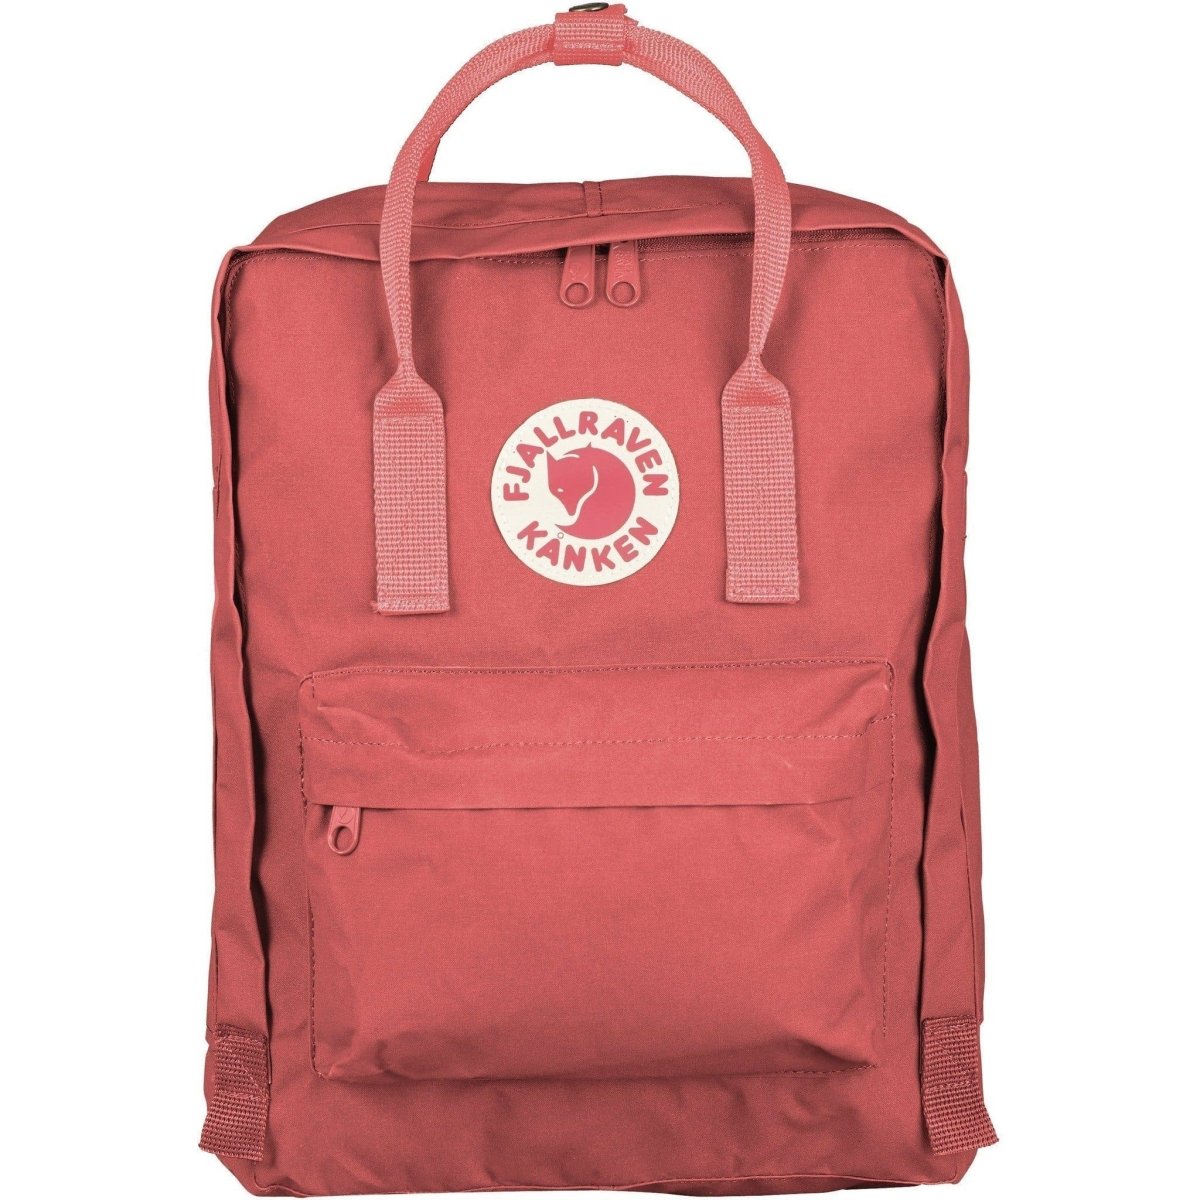 Fjallraven Kanken Backpack Peach Pink - Love Luggage